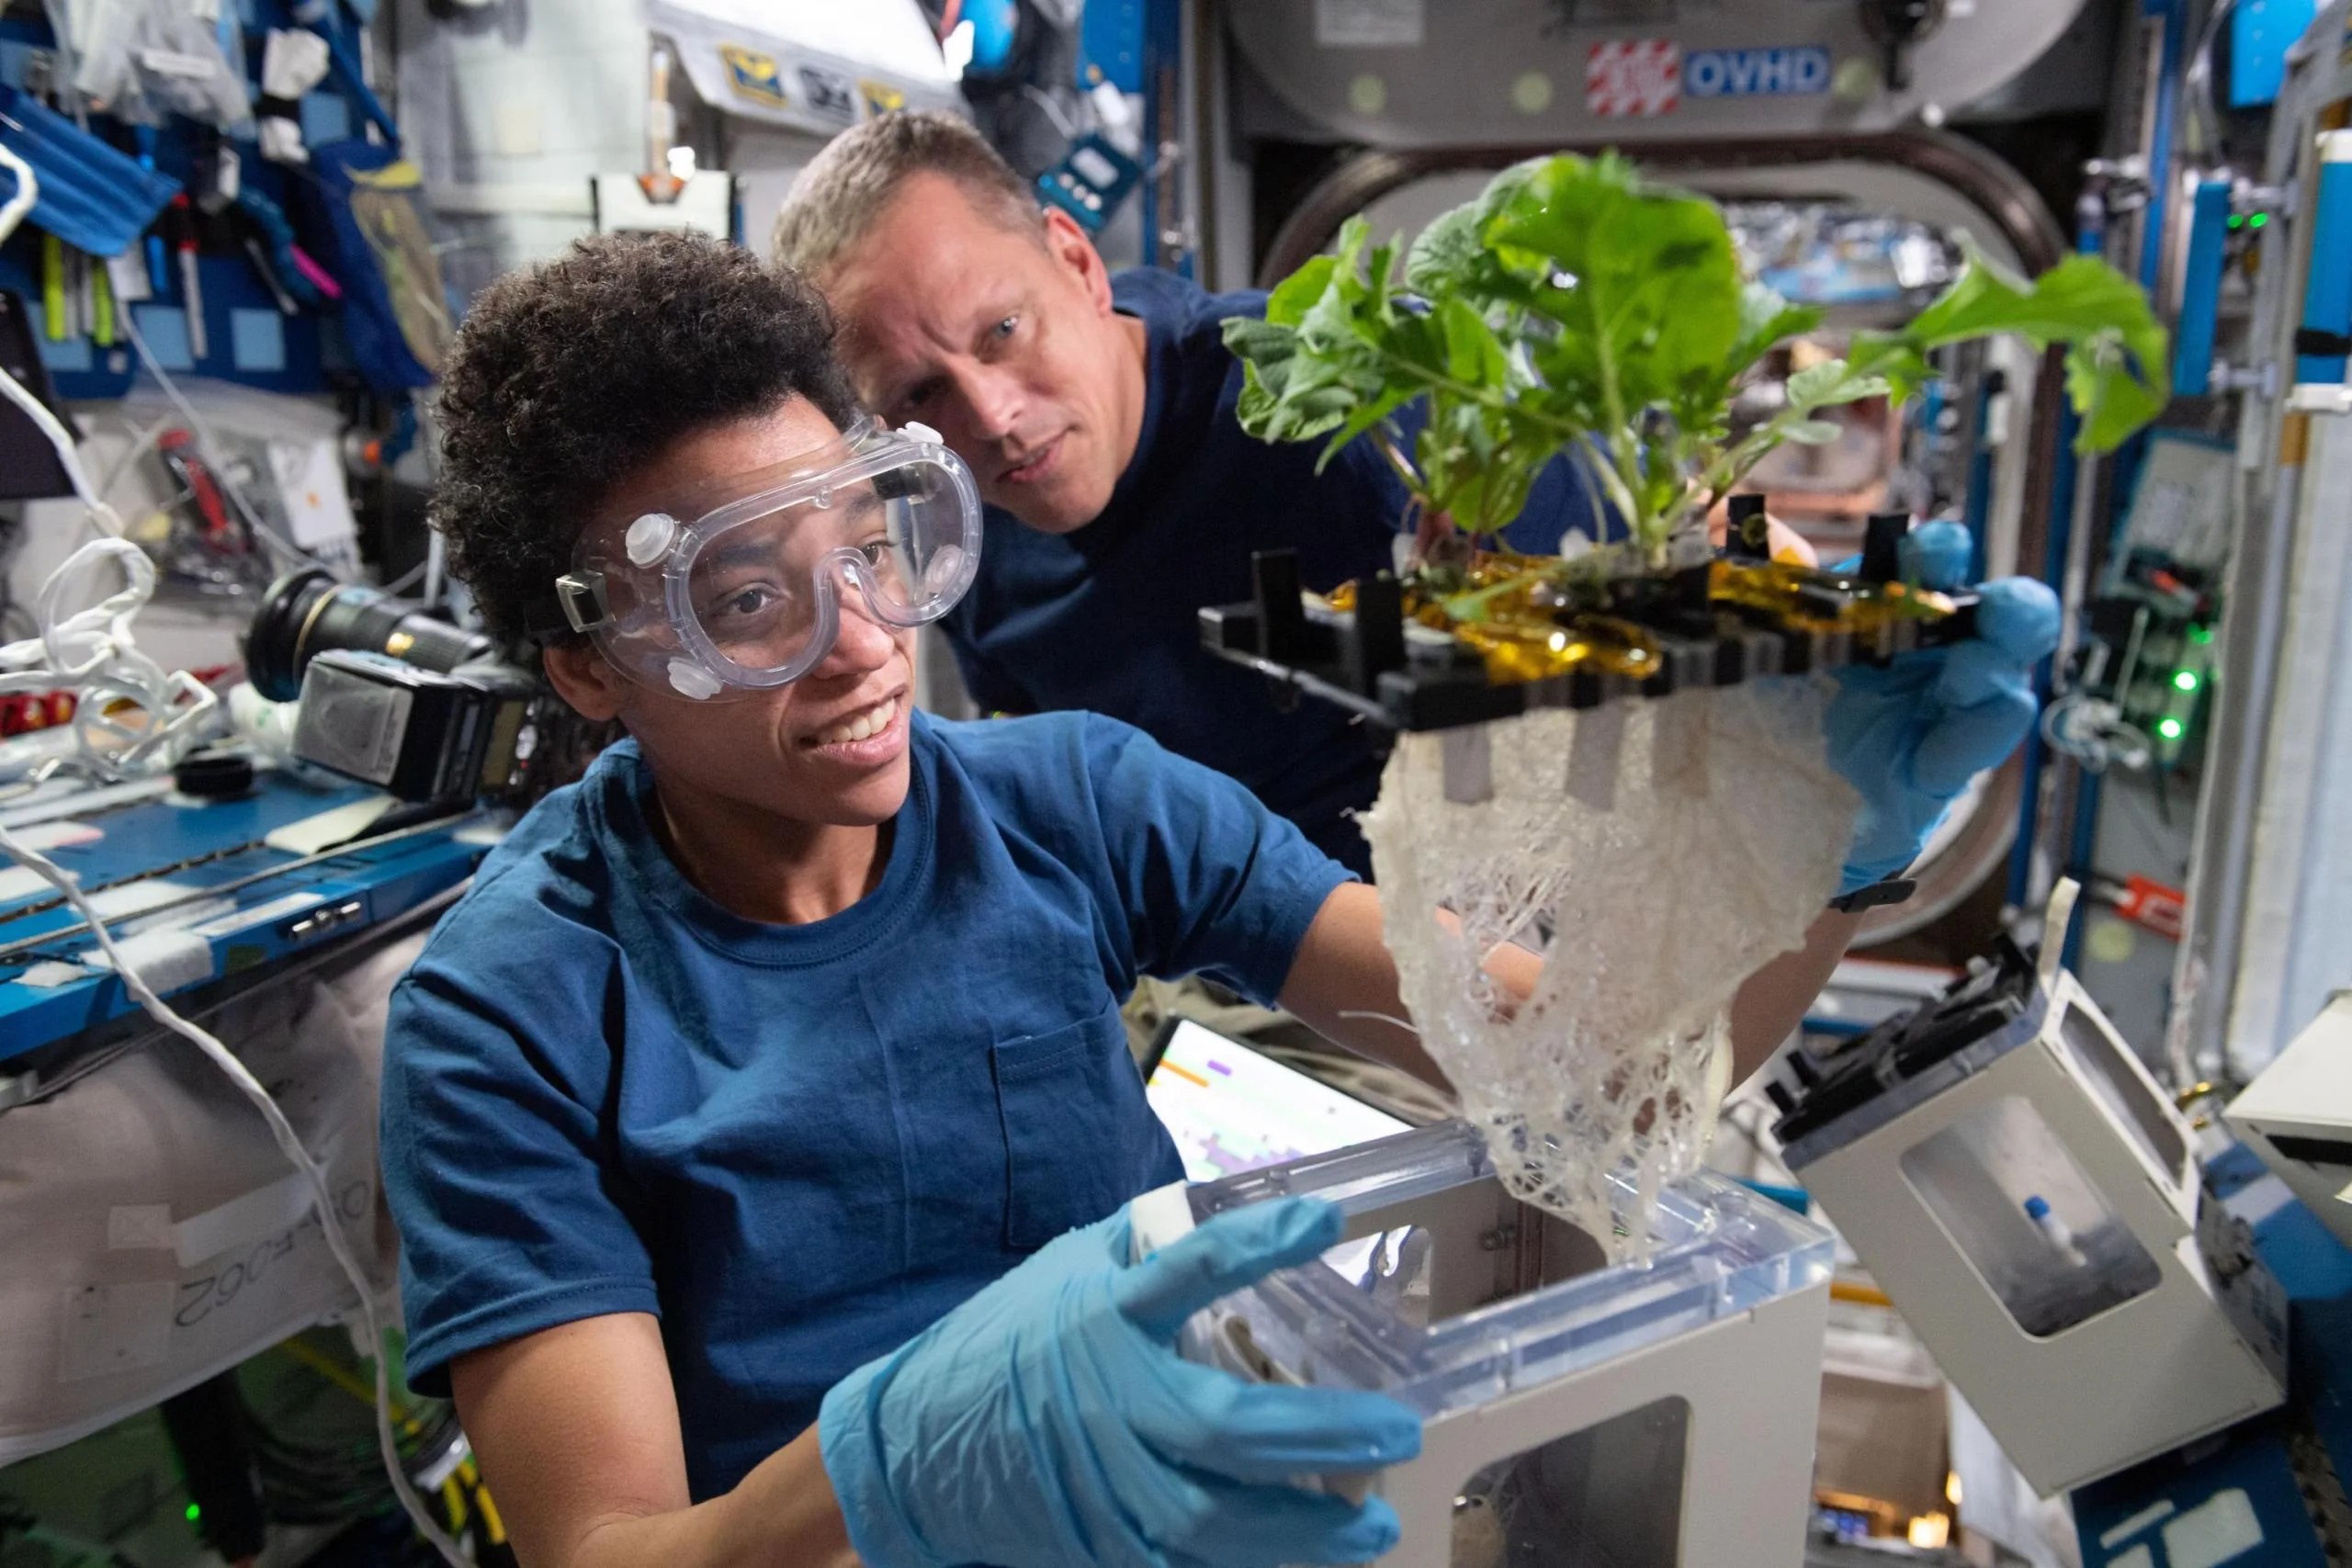 imagen de dos astronautas observando un experimento de plantas